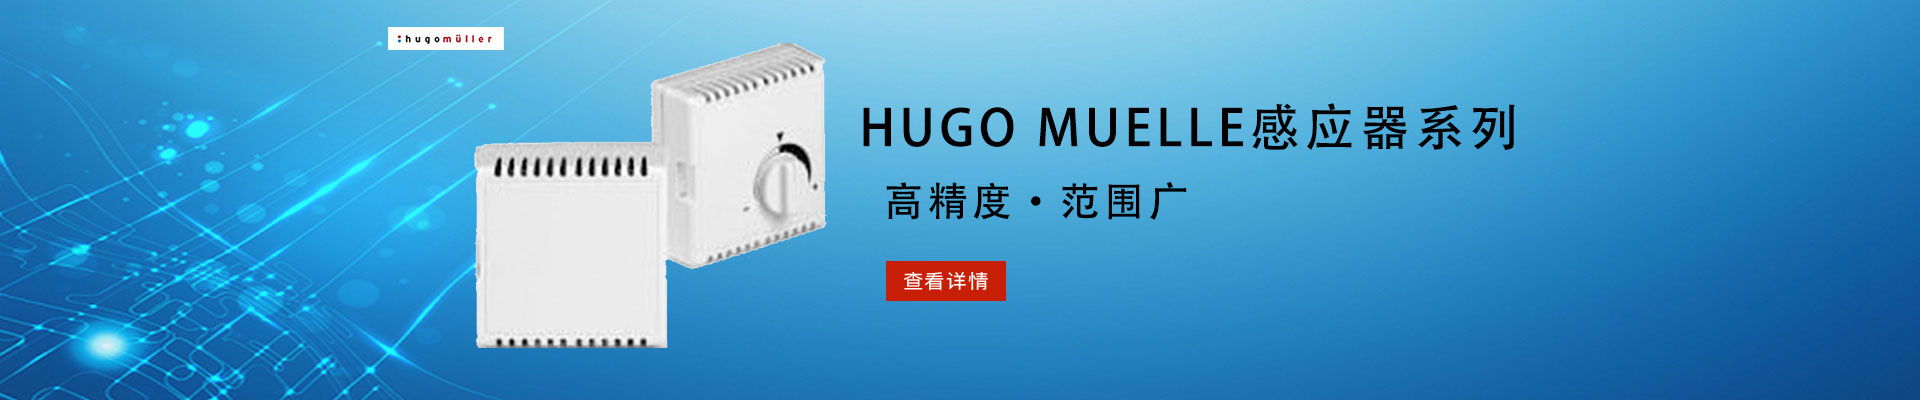 HUGO MUELLER|温湿度传感器